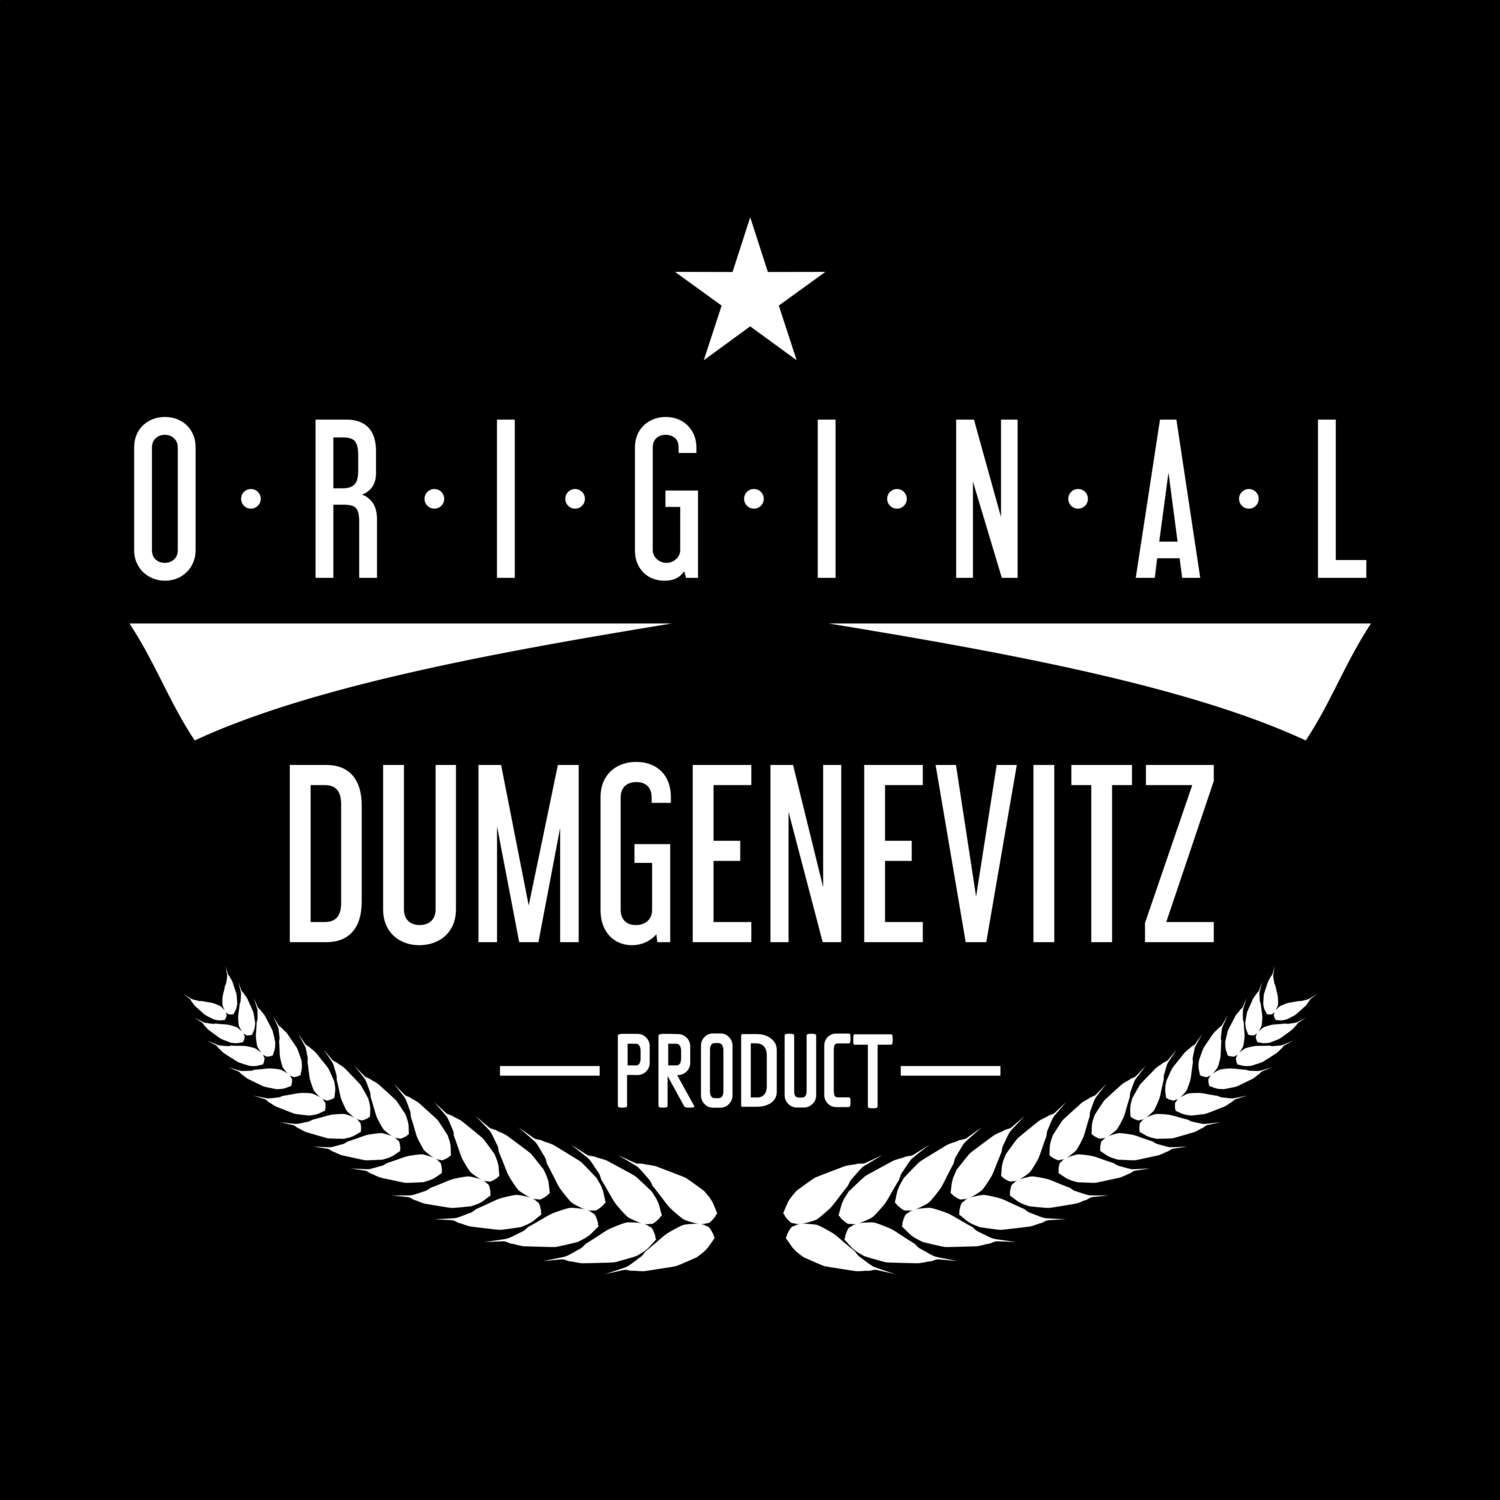 Dumgenevitz T-Shirt »Original Product«